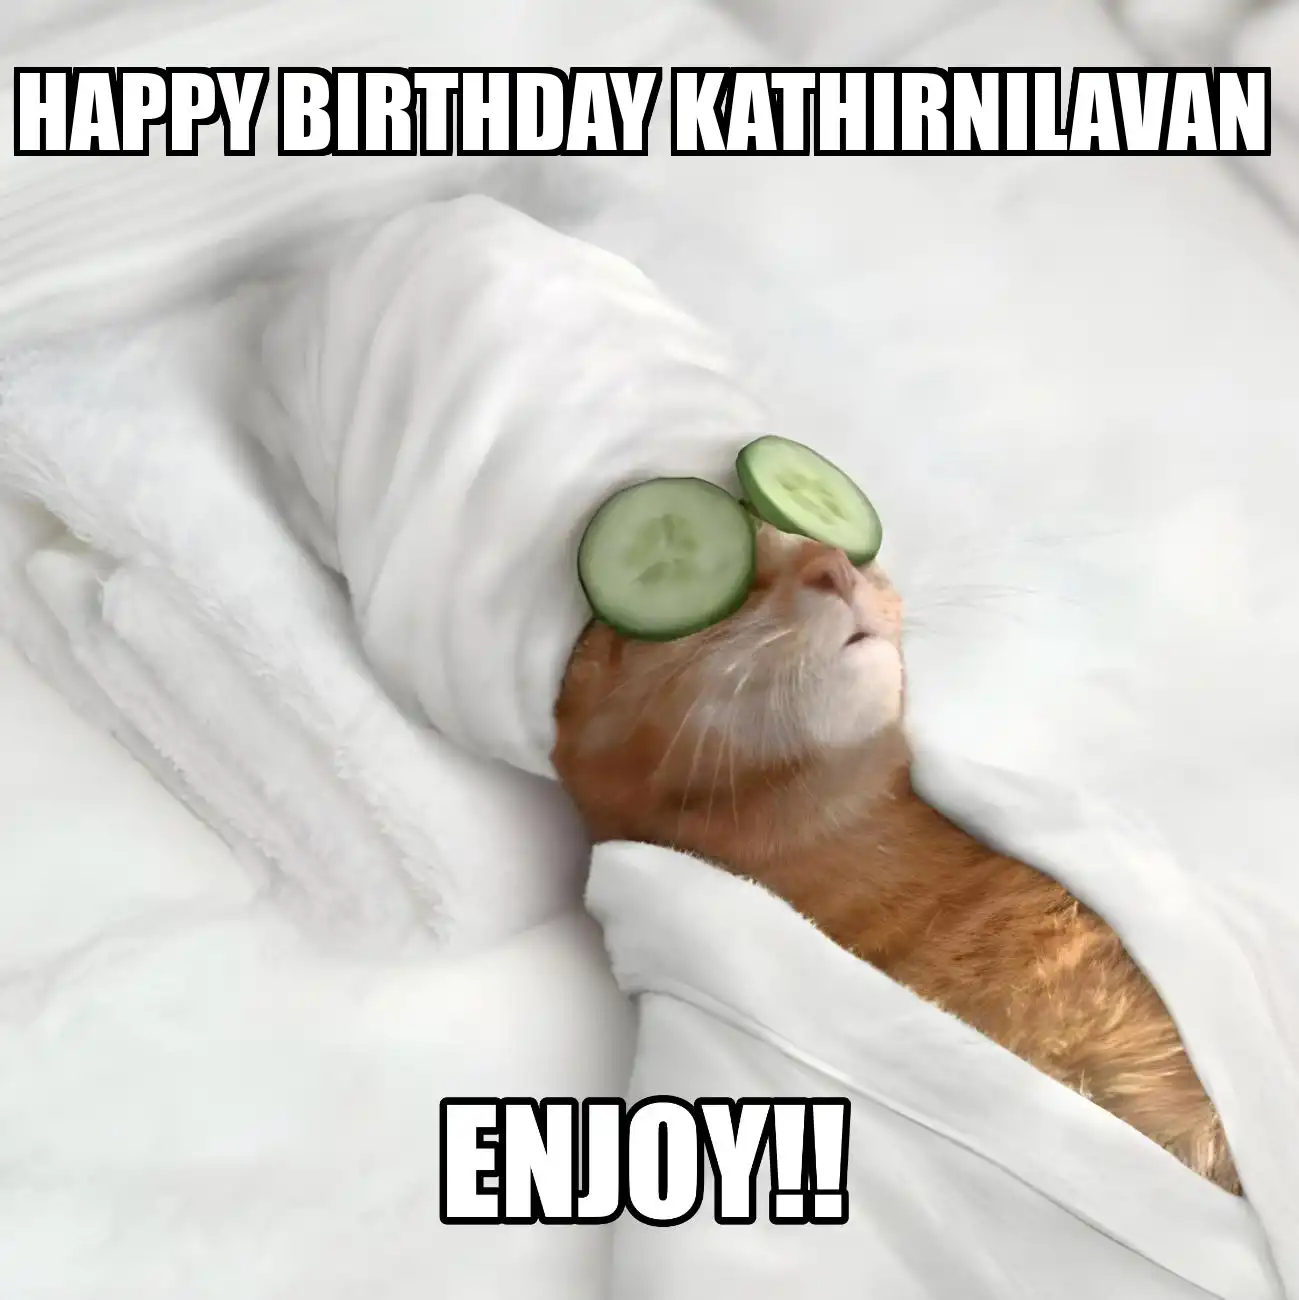 Happy Birthday Kathirnilavan Enjoy Cat Meme